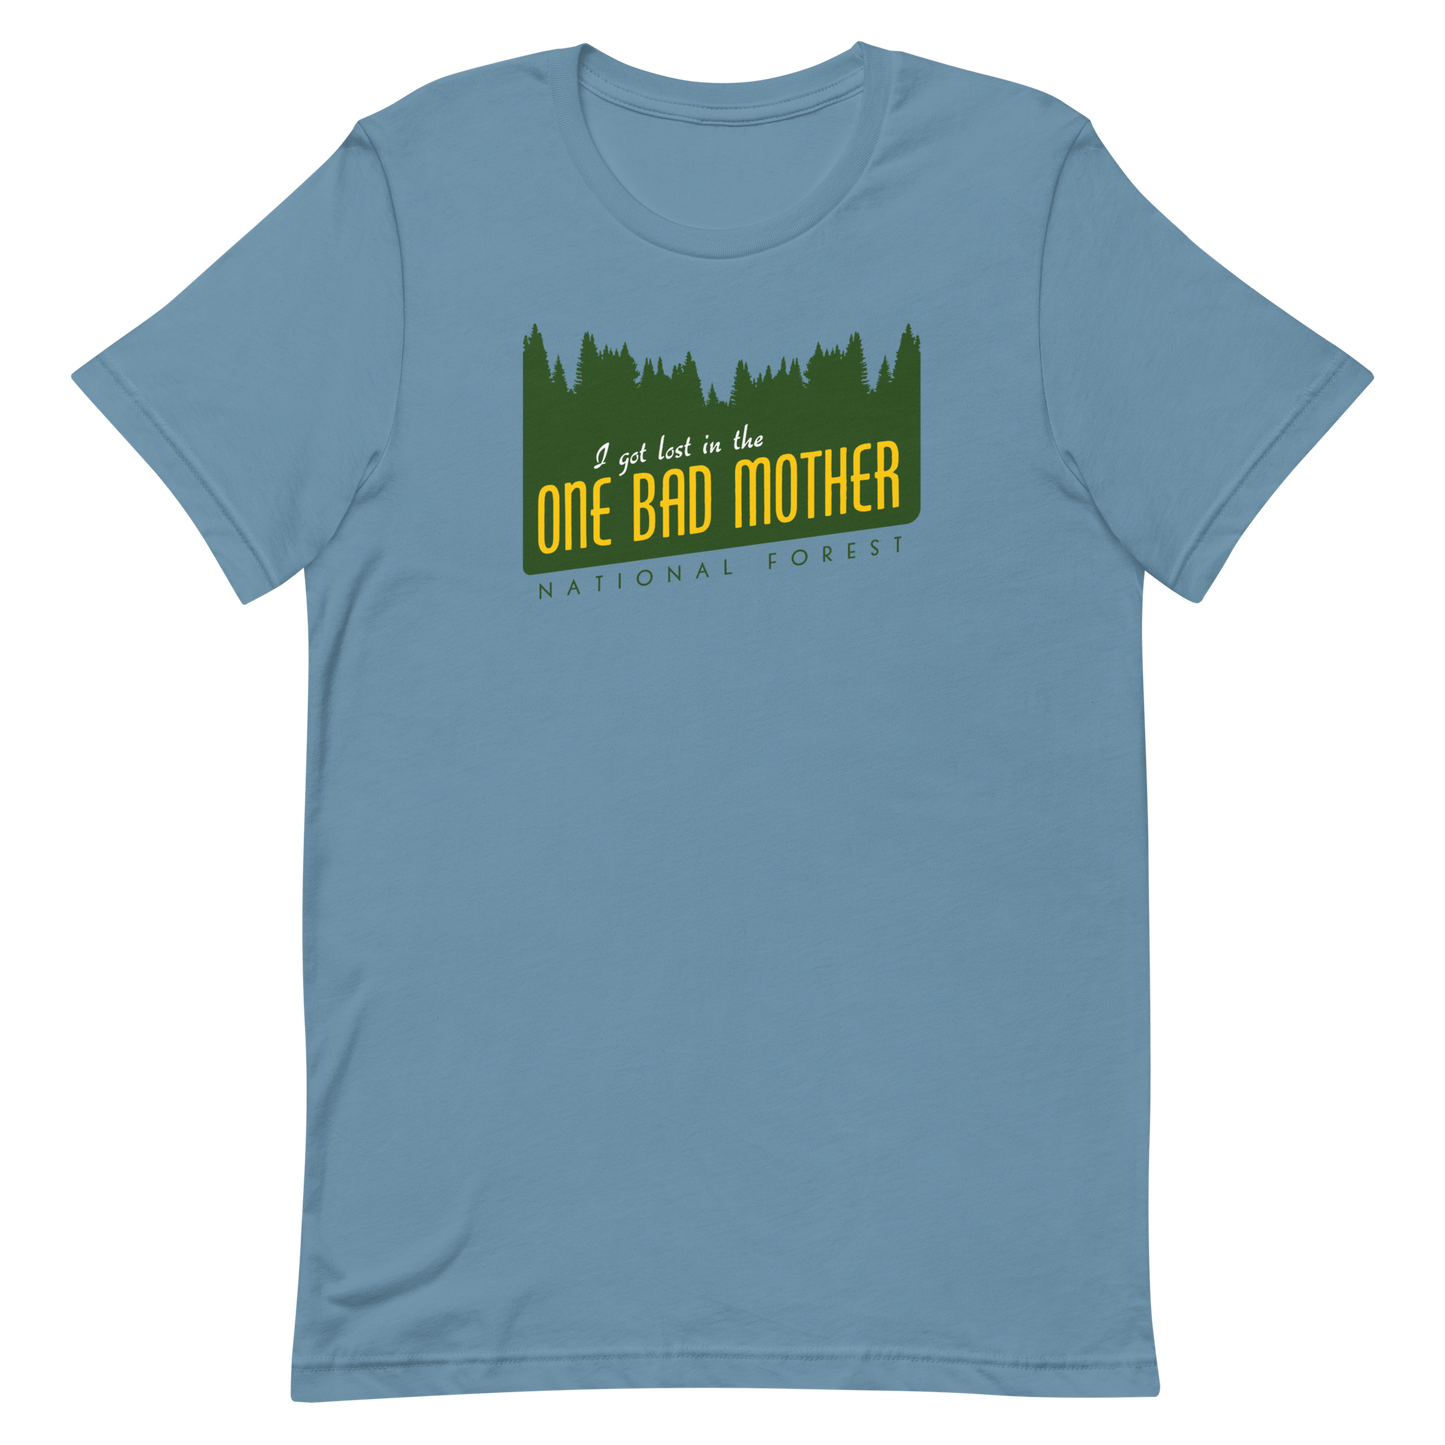 OBM National Forest T-shirt